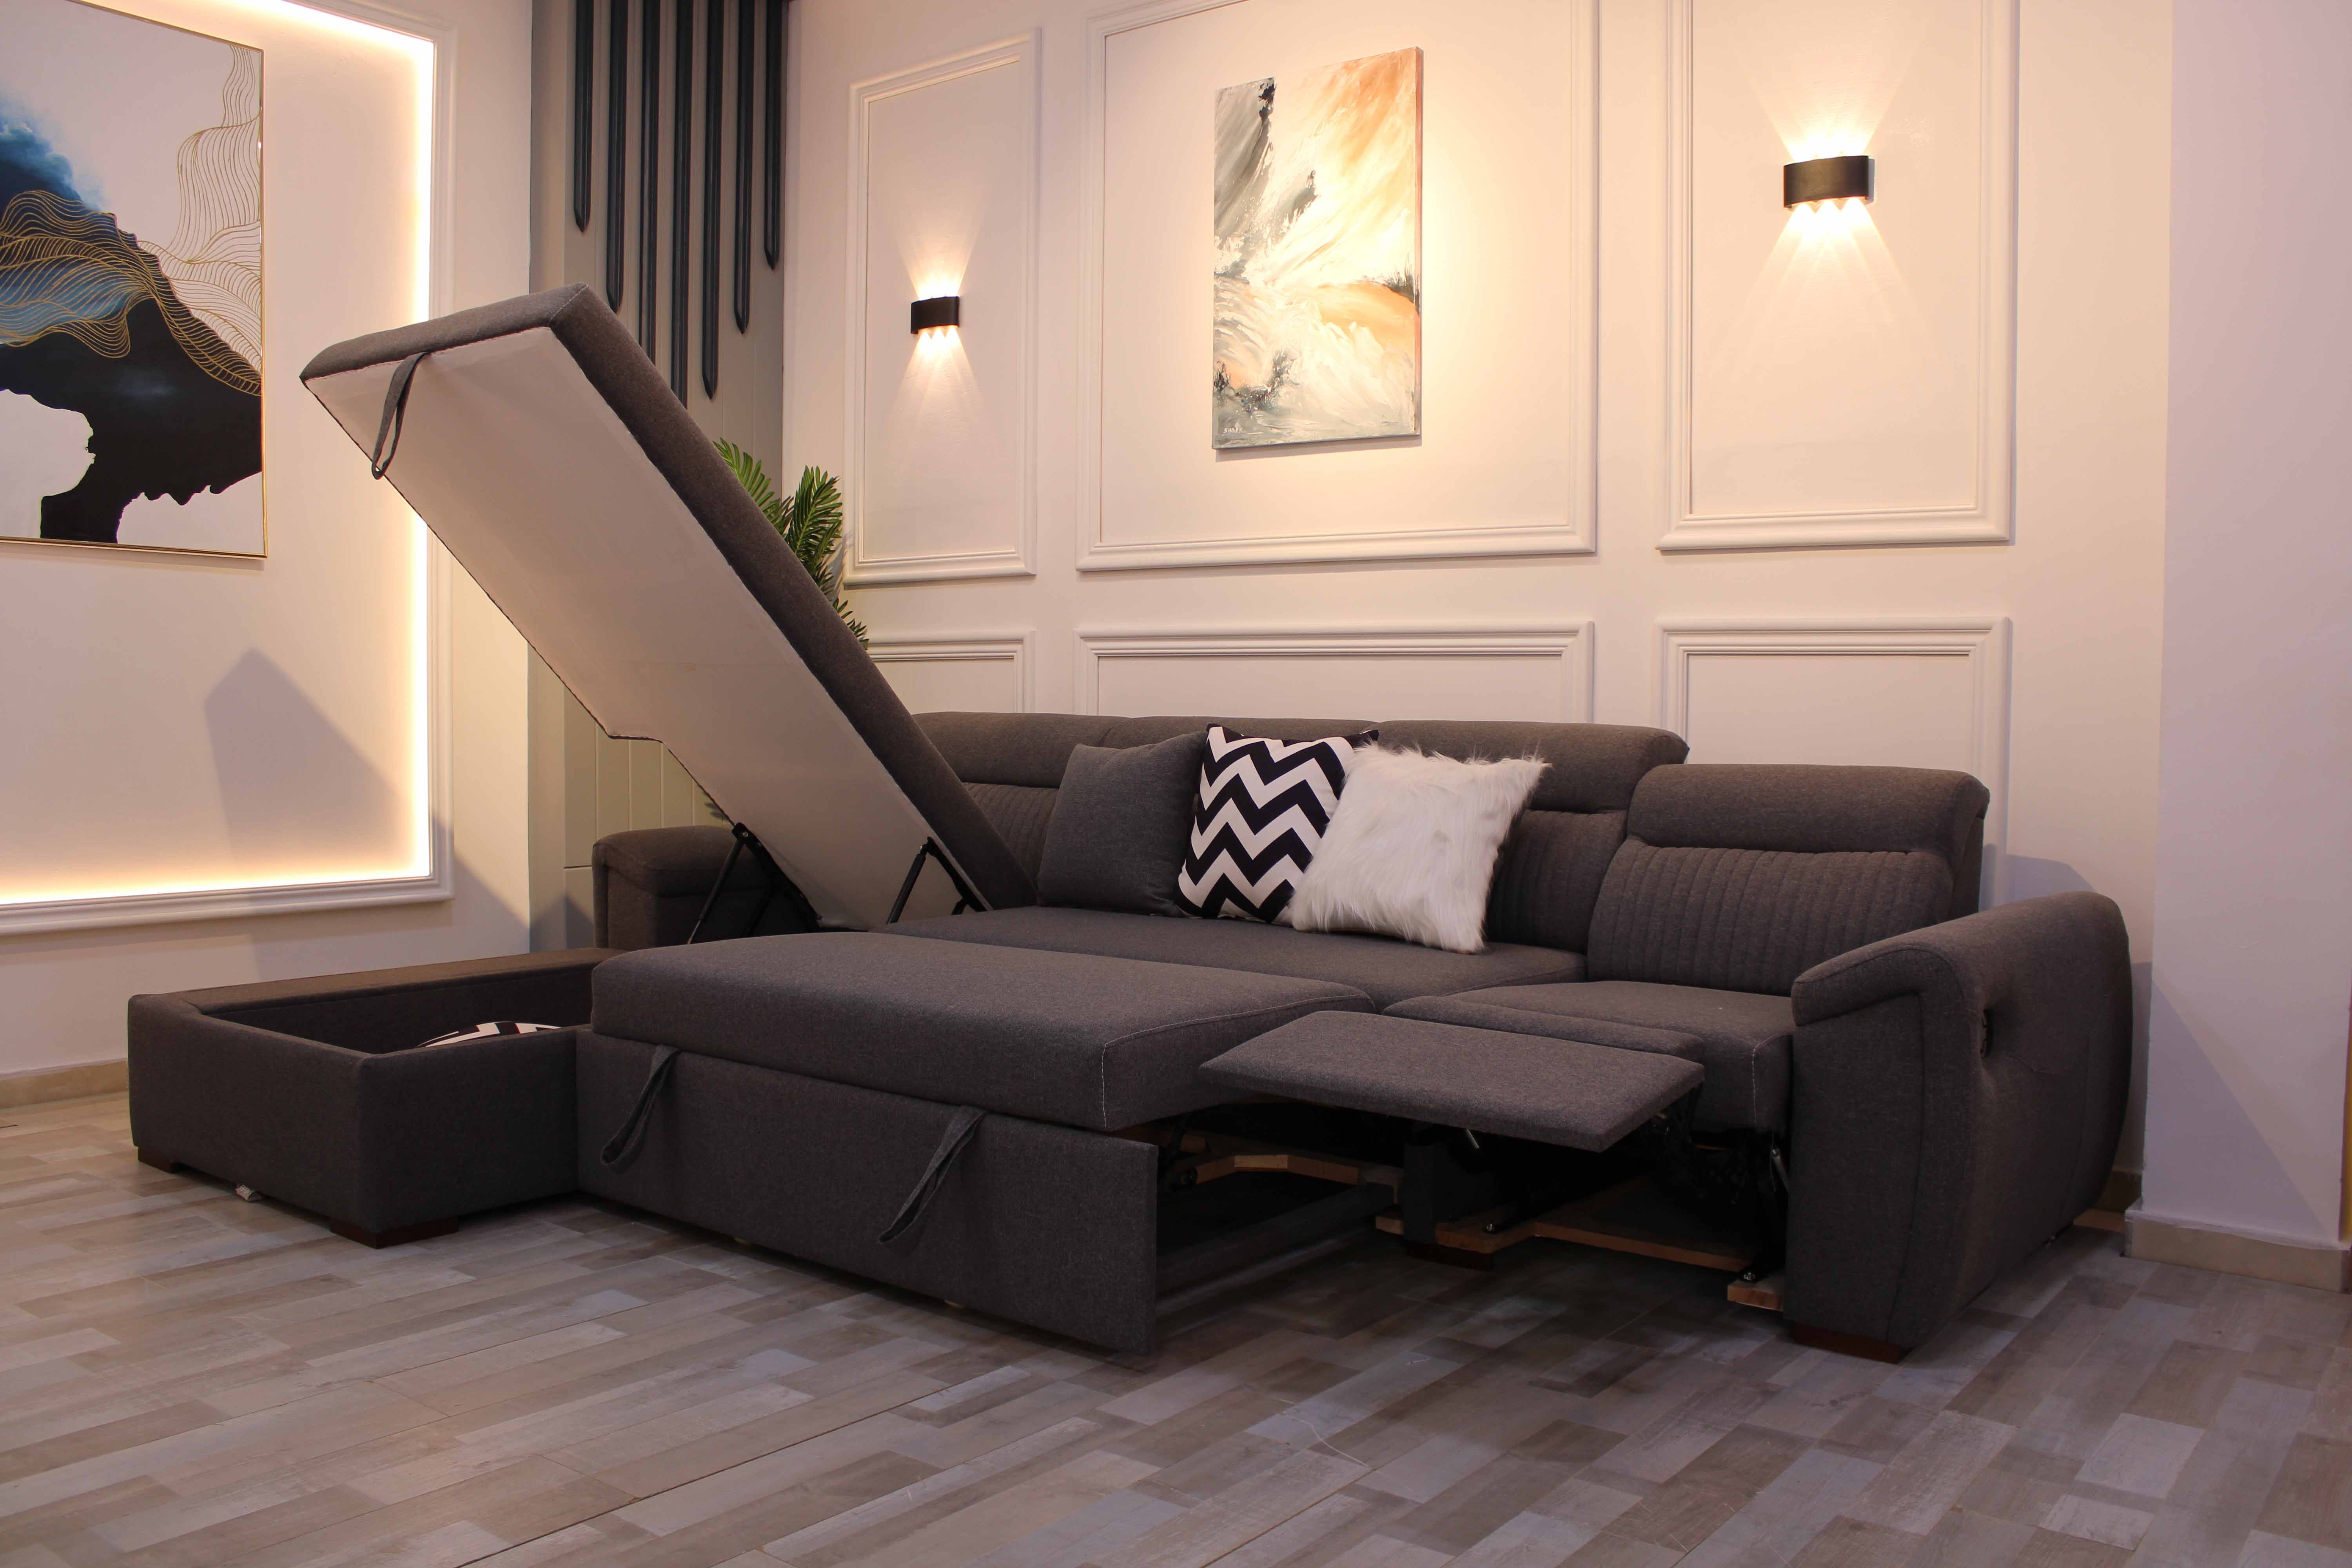 The Gray superb Living Room